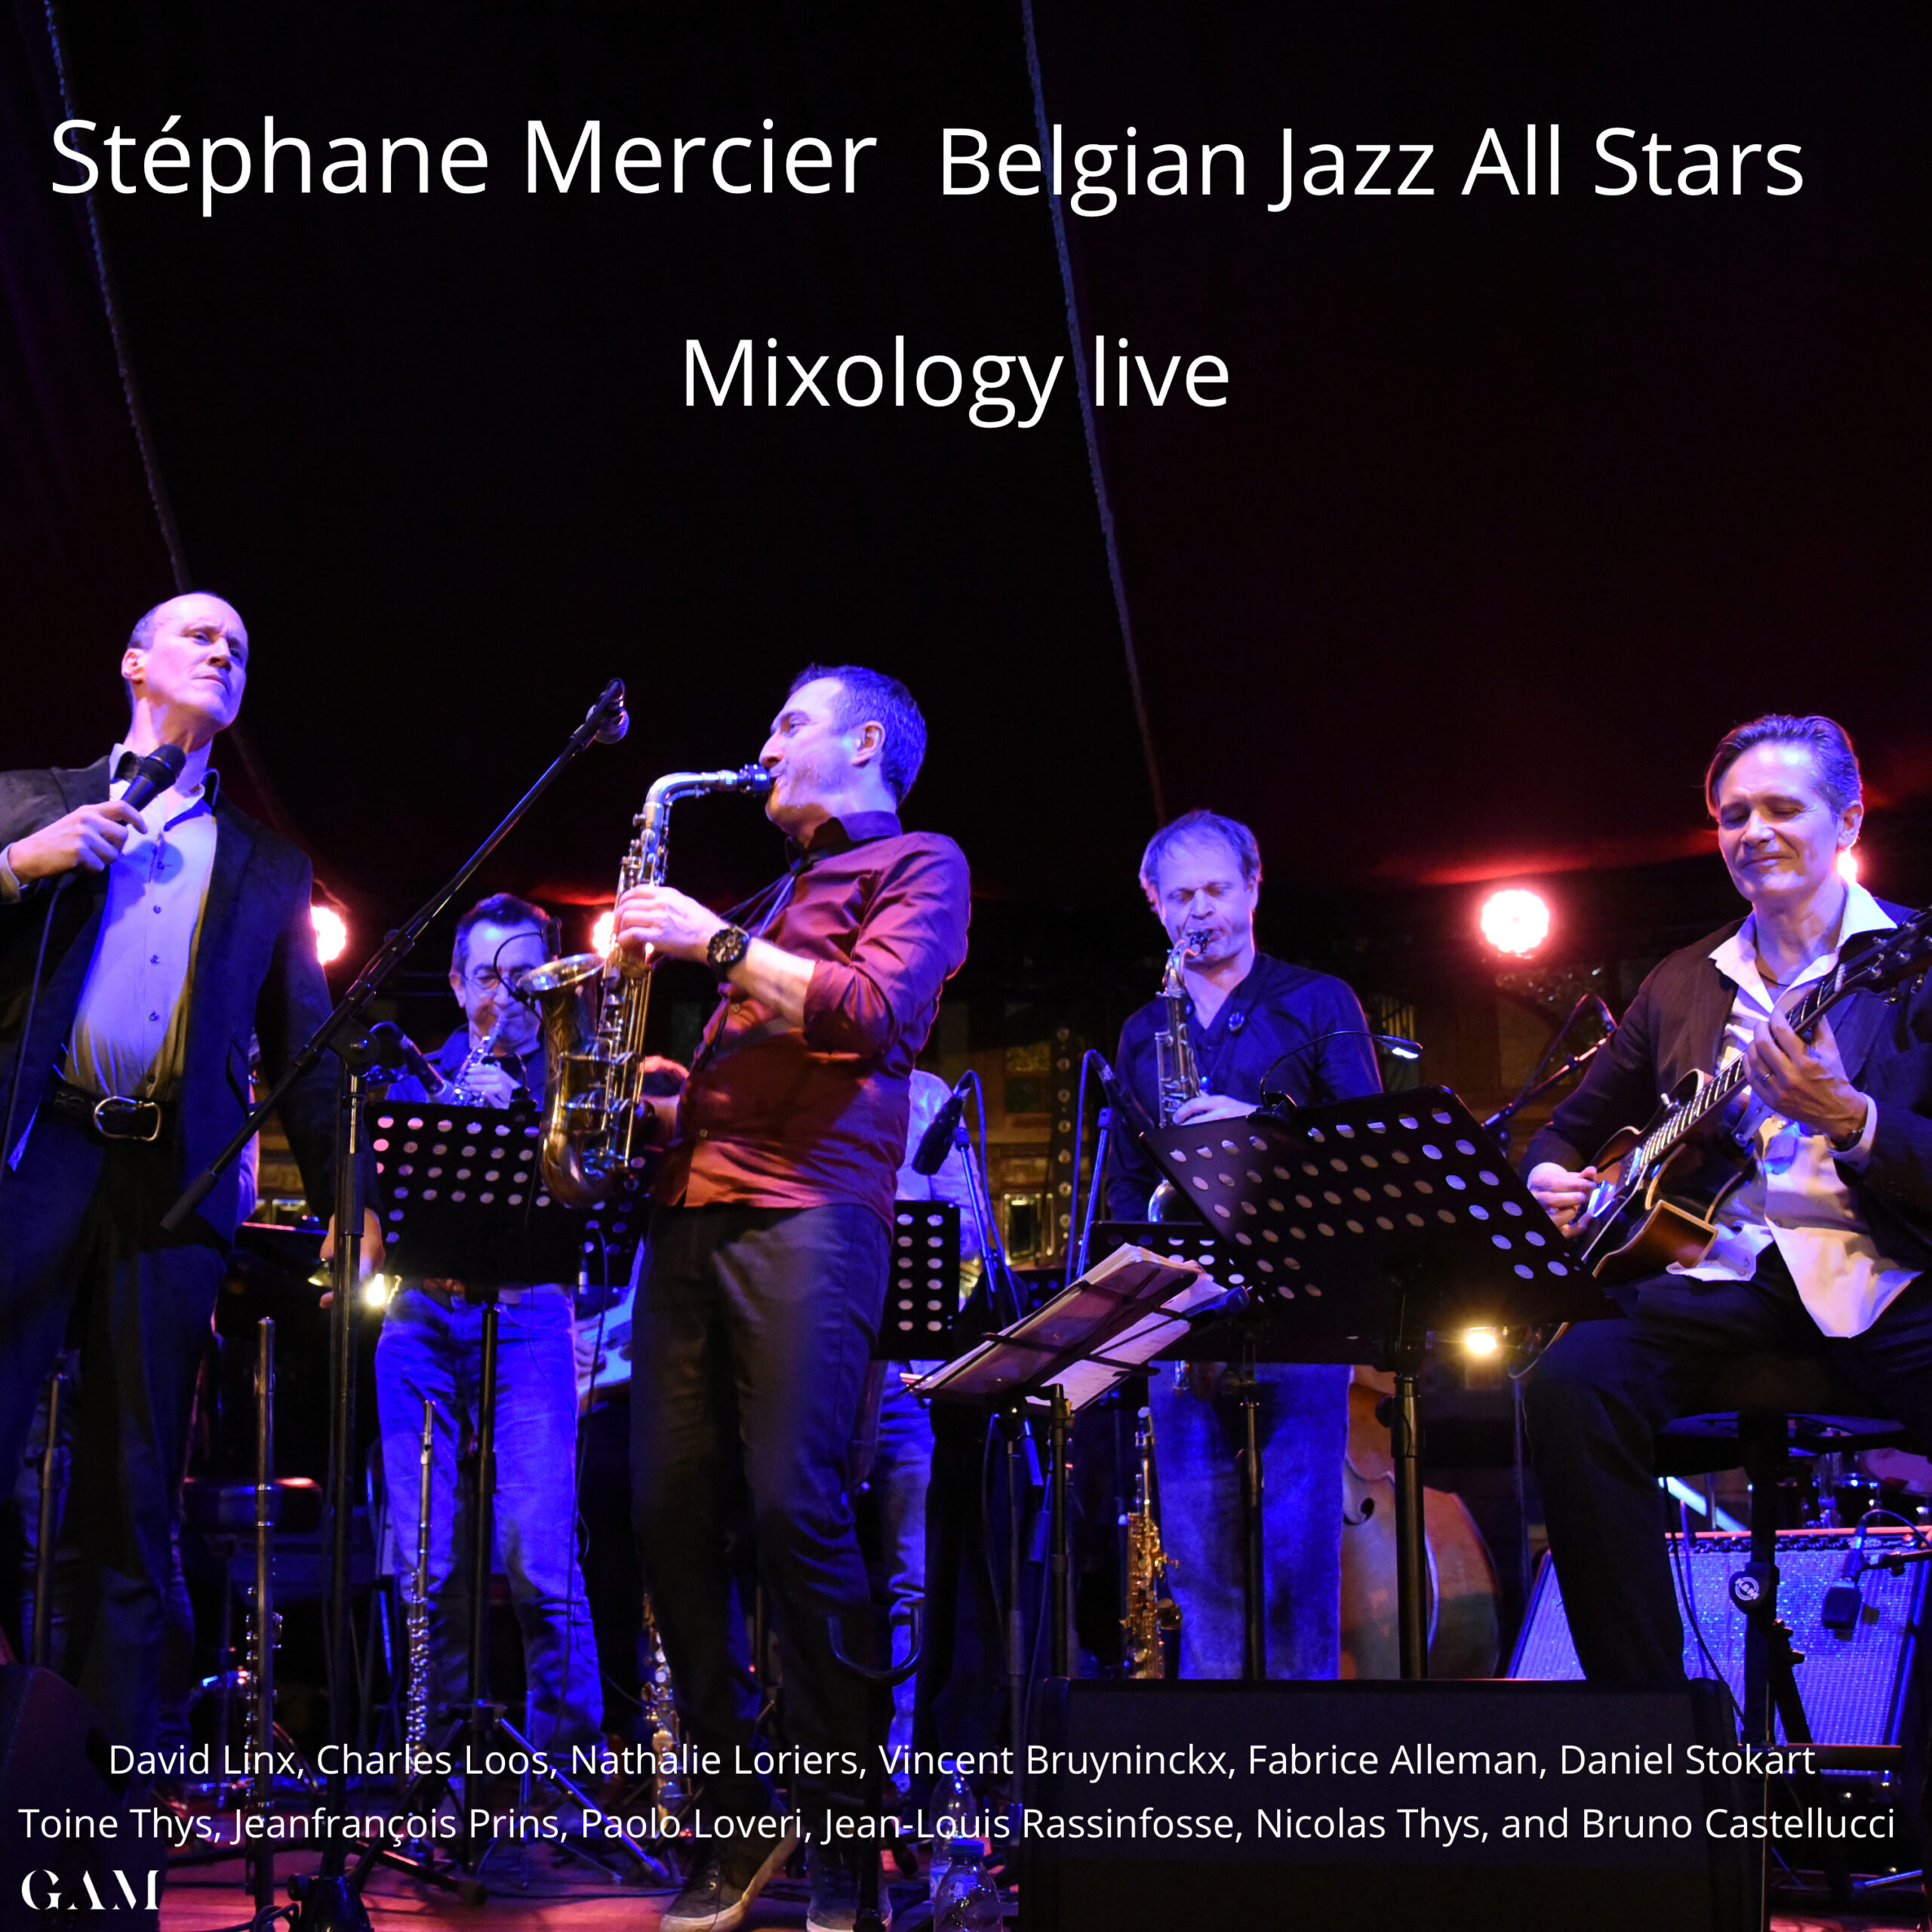 Album Mixology live - Stéphane Mercier Belgian Jazz All Stars - GAM Music